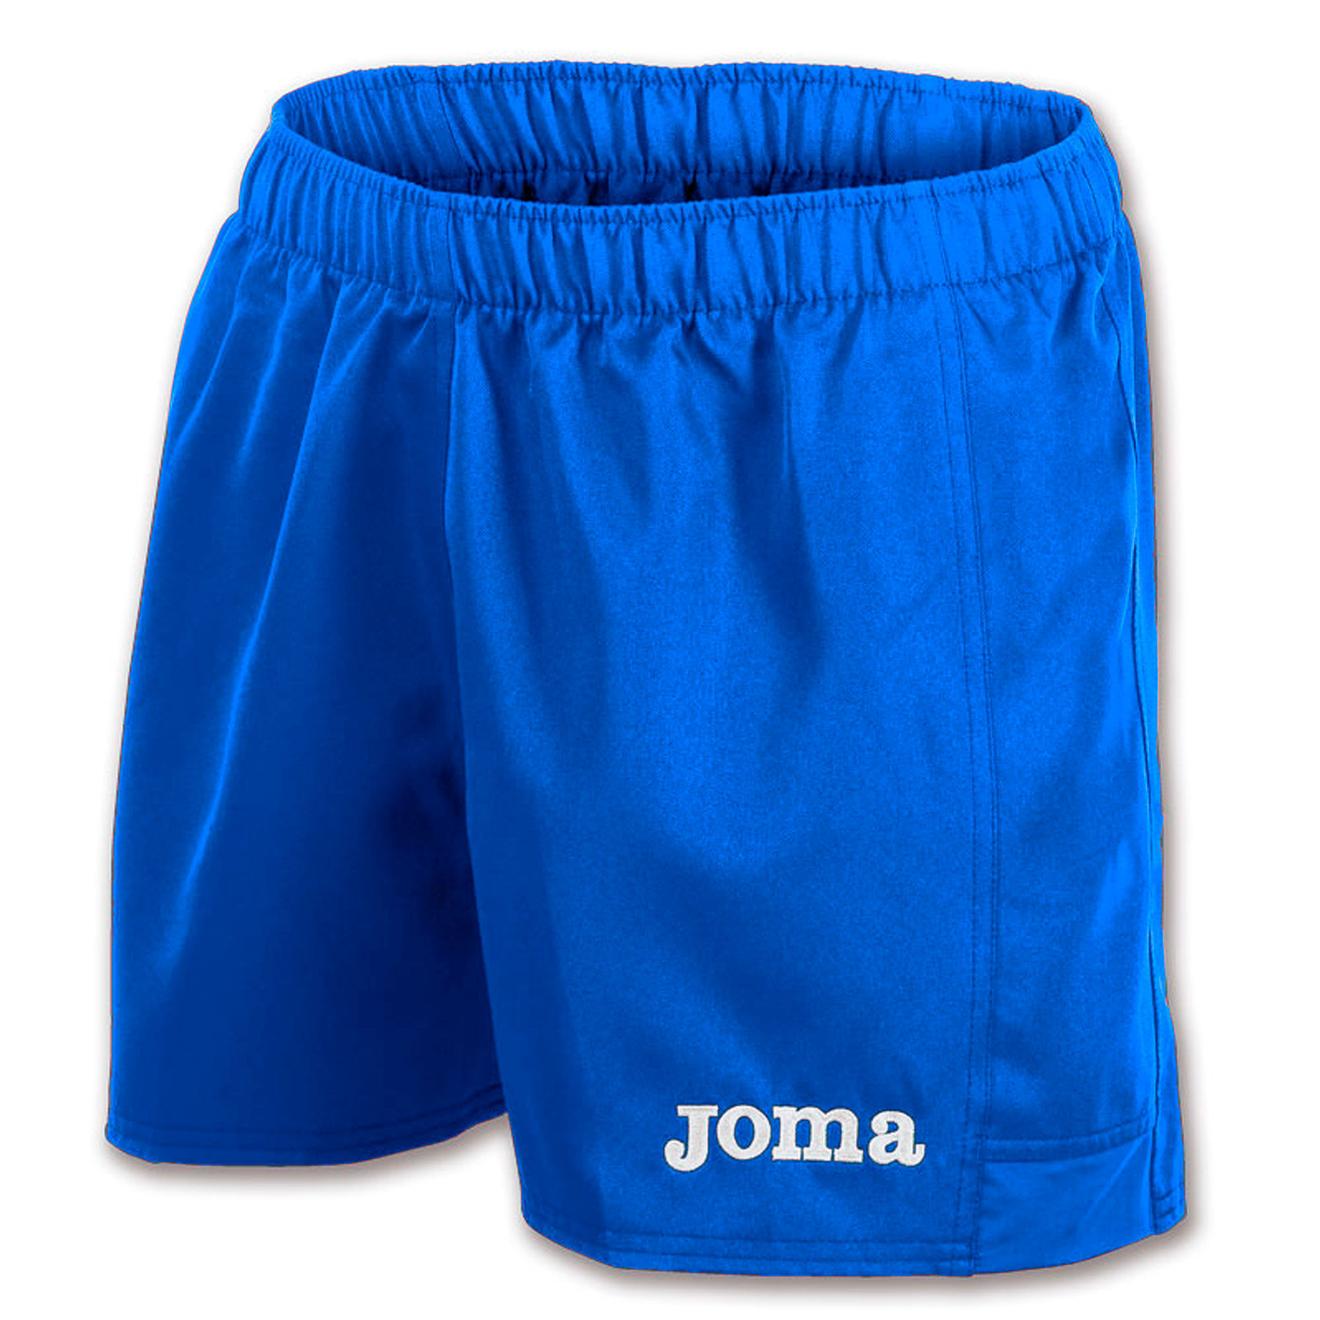 Shorts man Myskin royal blue offers at £17.5 in Joma